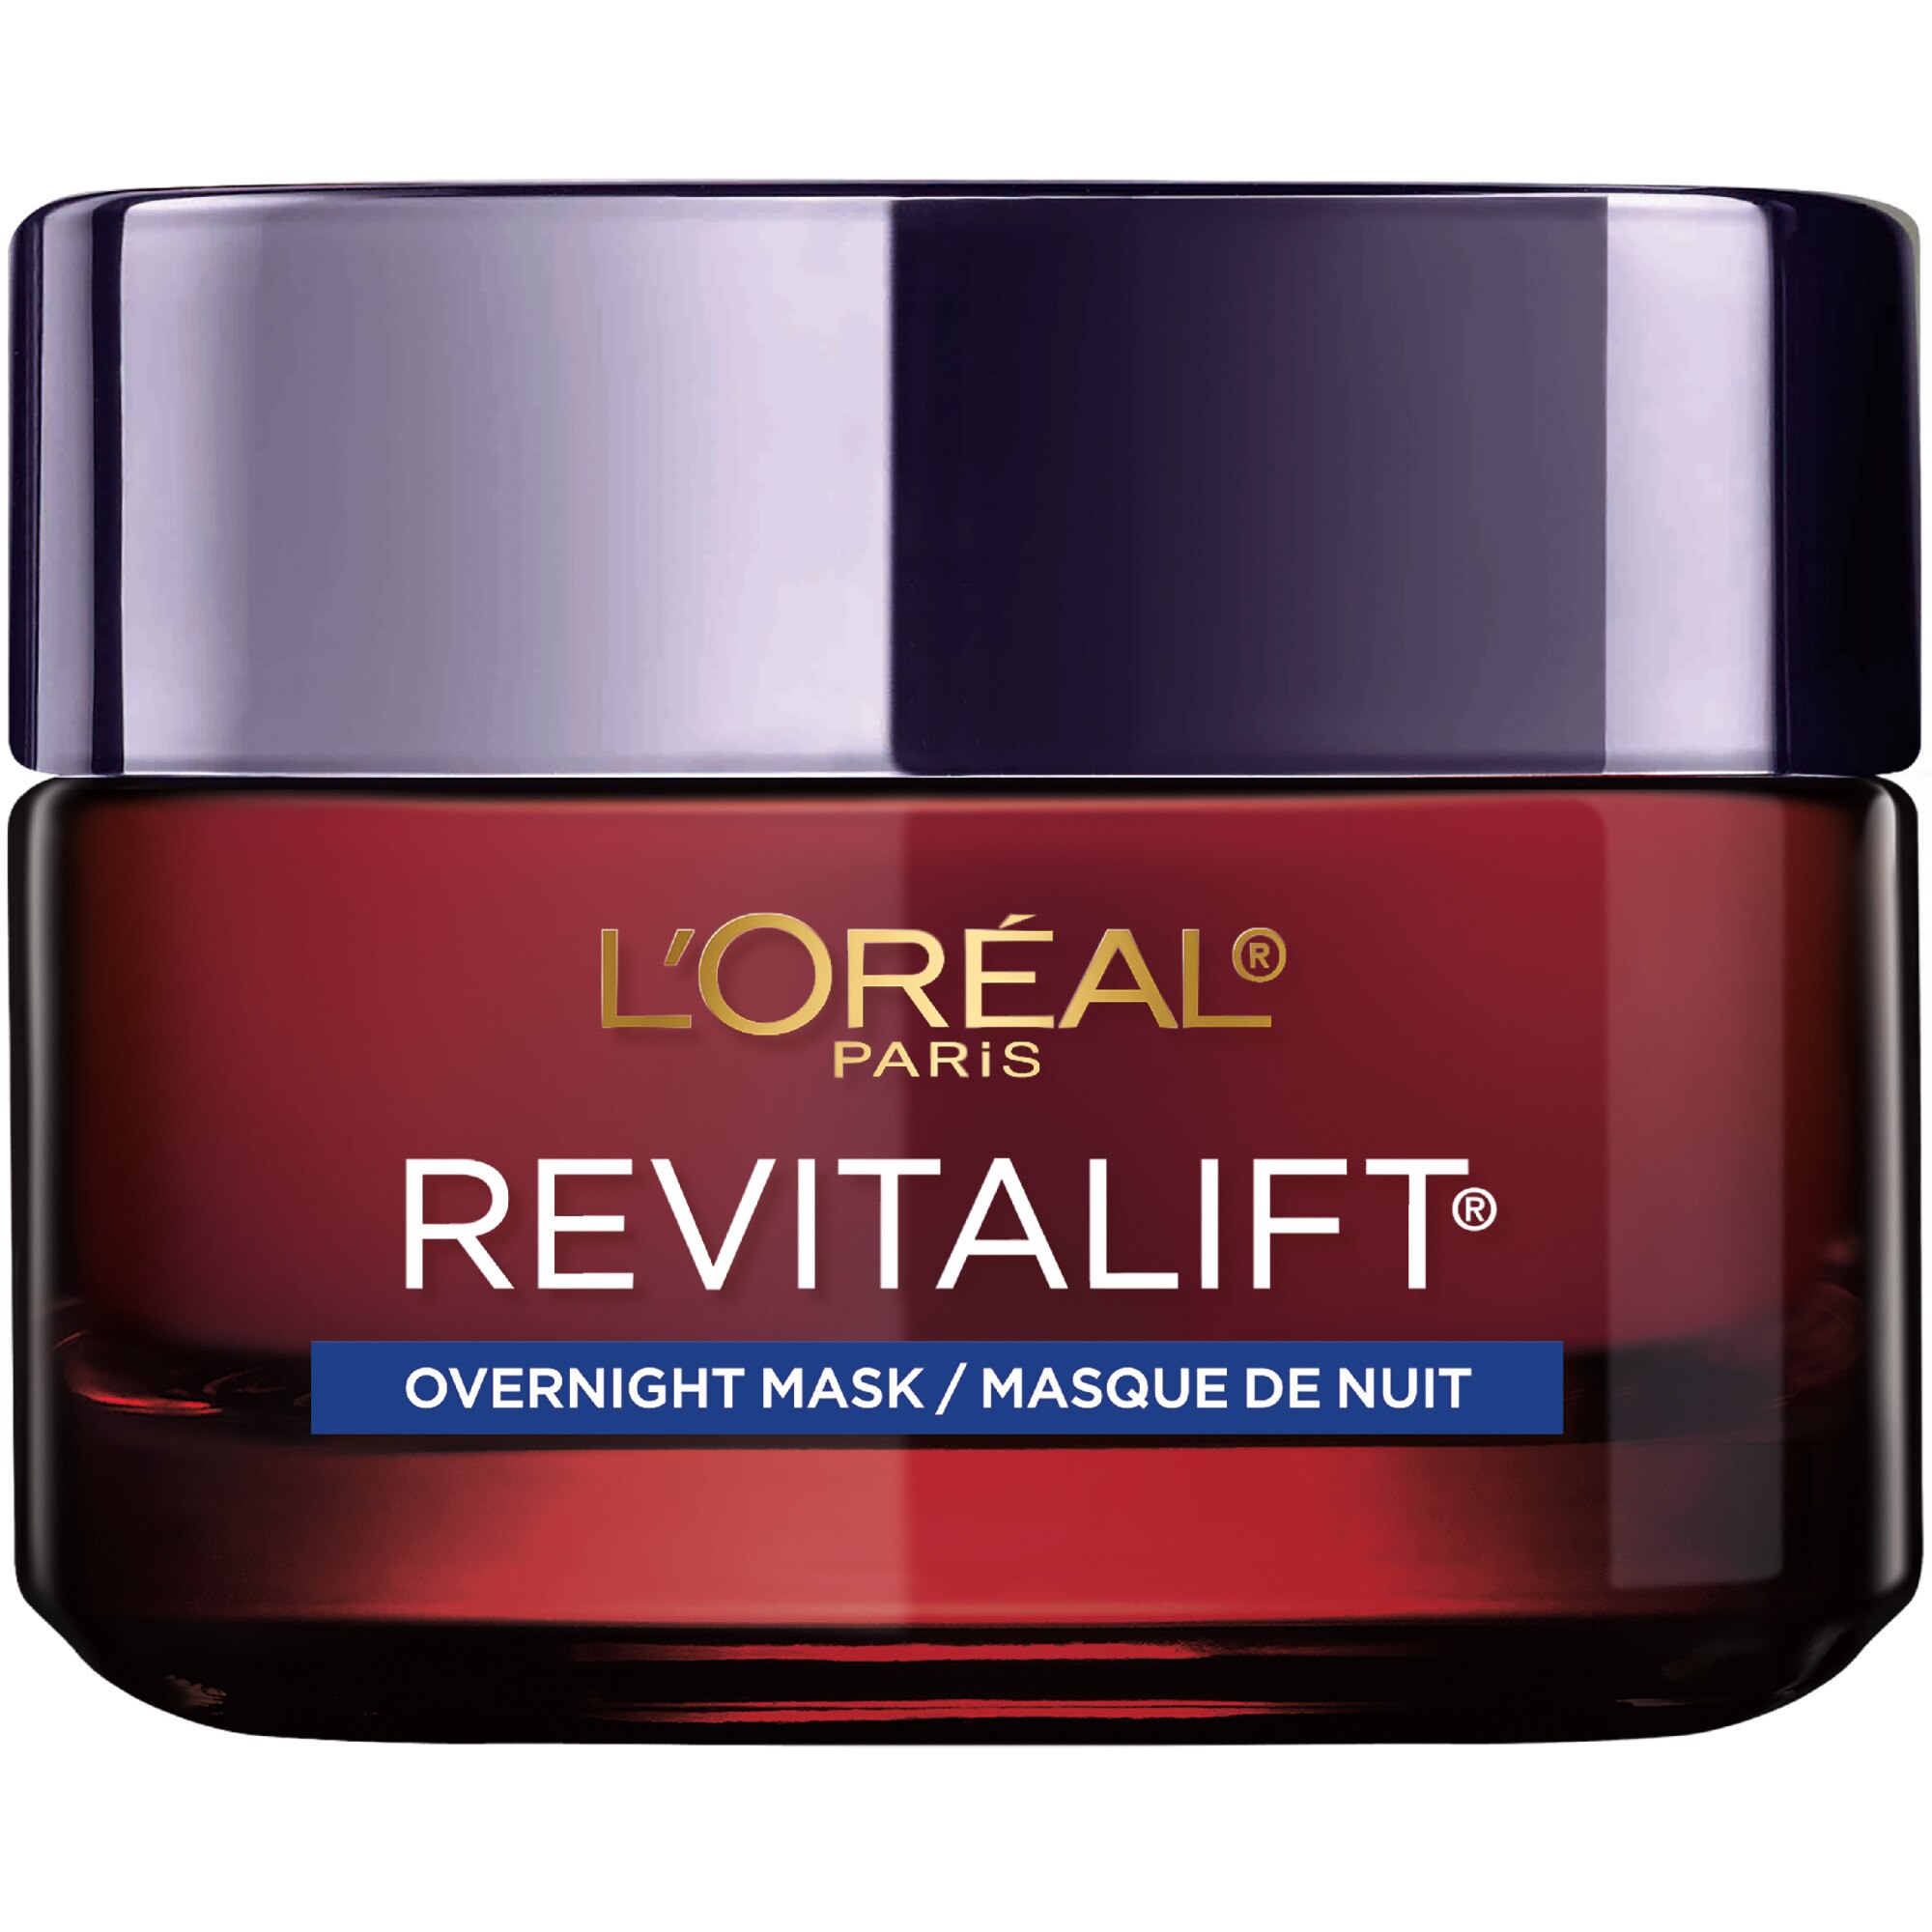 L'Oreal Paris Revitalift Triple Power Intensive - Mascarilla facial antienvejecimiento, uso nocturno, 1.7 oz